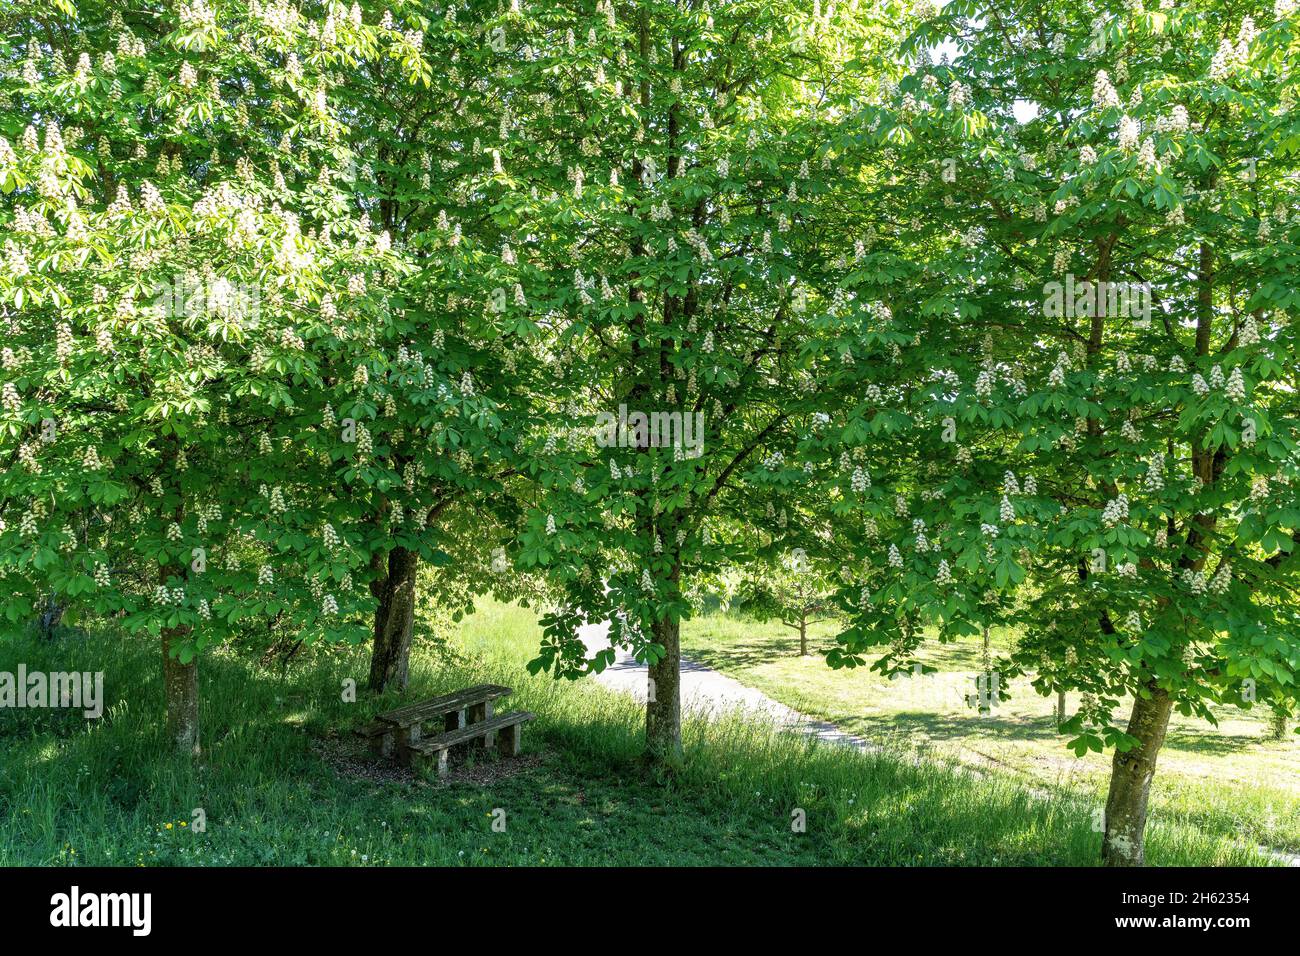 europe,germany,baden-wuerttemberg,schönbuch region,herrenberg,shady resting place under trees Stock Photo